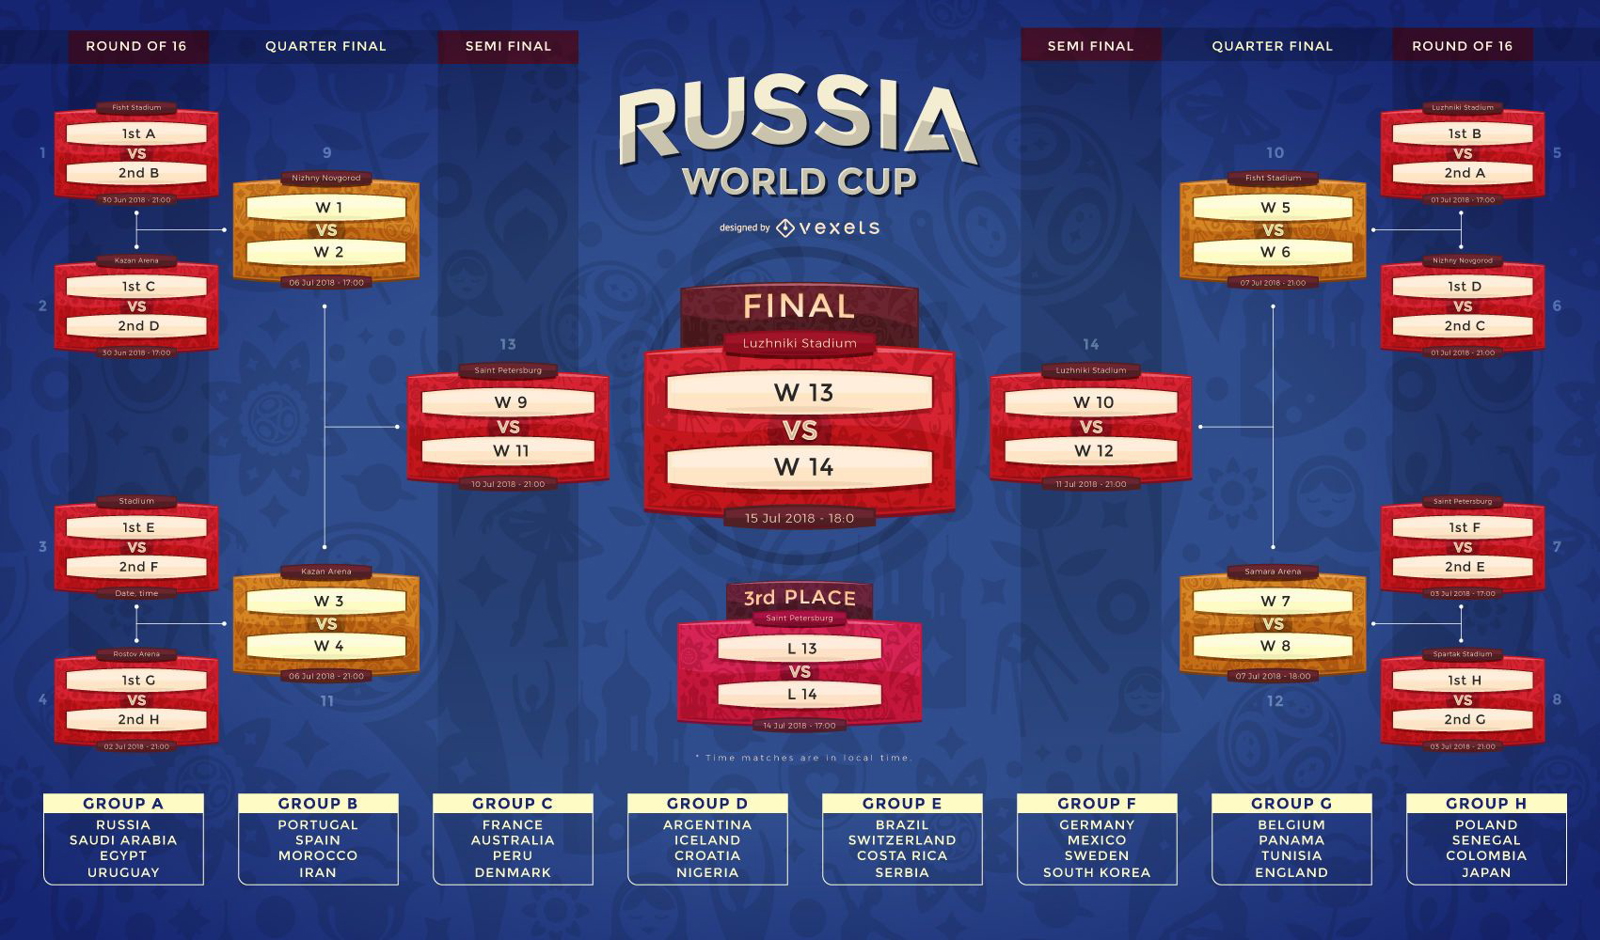 Baixar Vetor De Grupos E Bandeiras Da Rússia Da Copa Do Mundo 2018